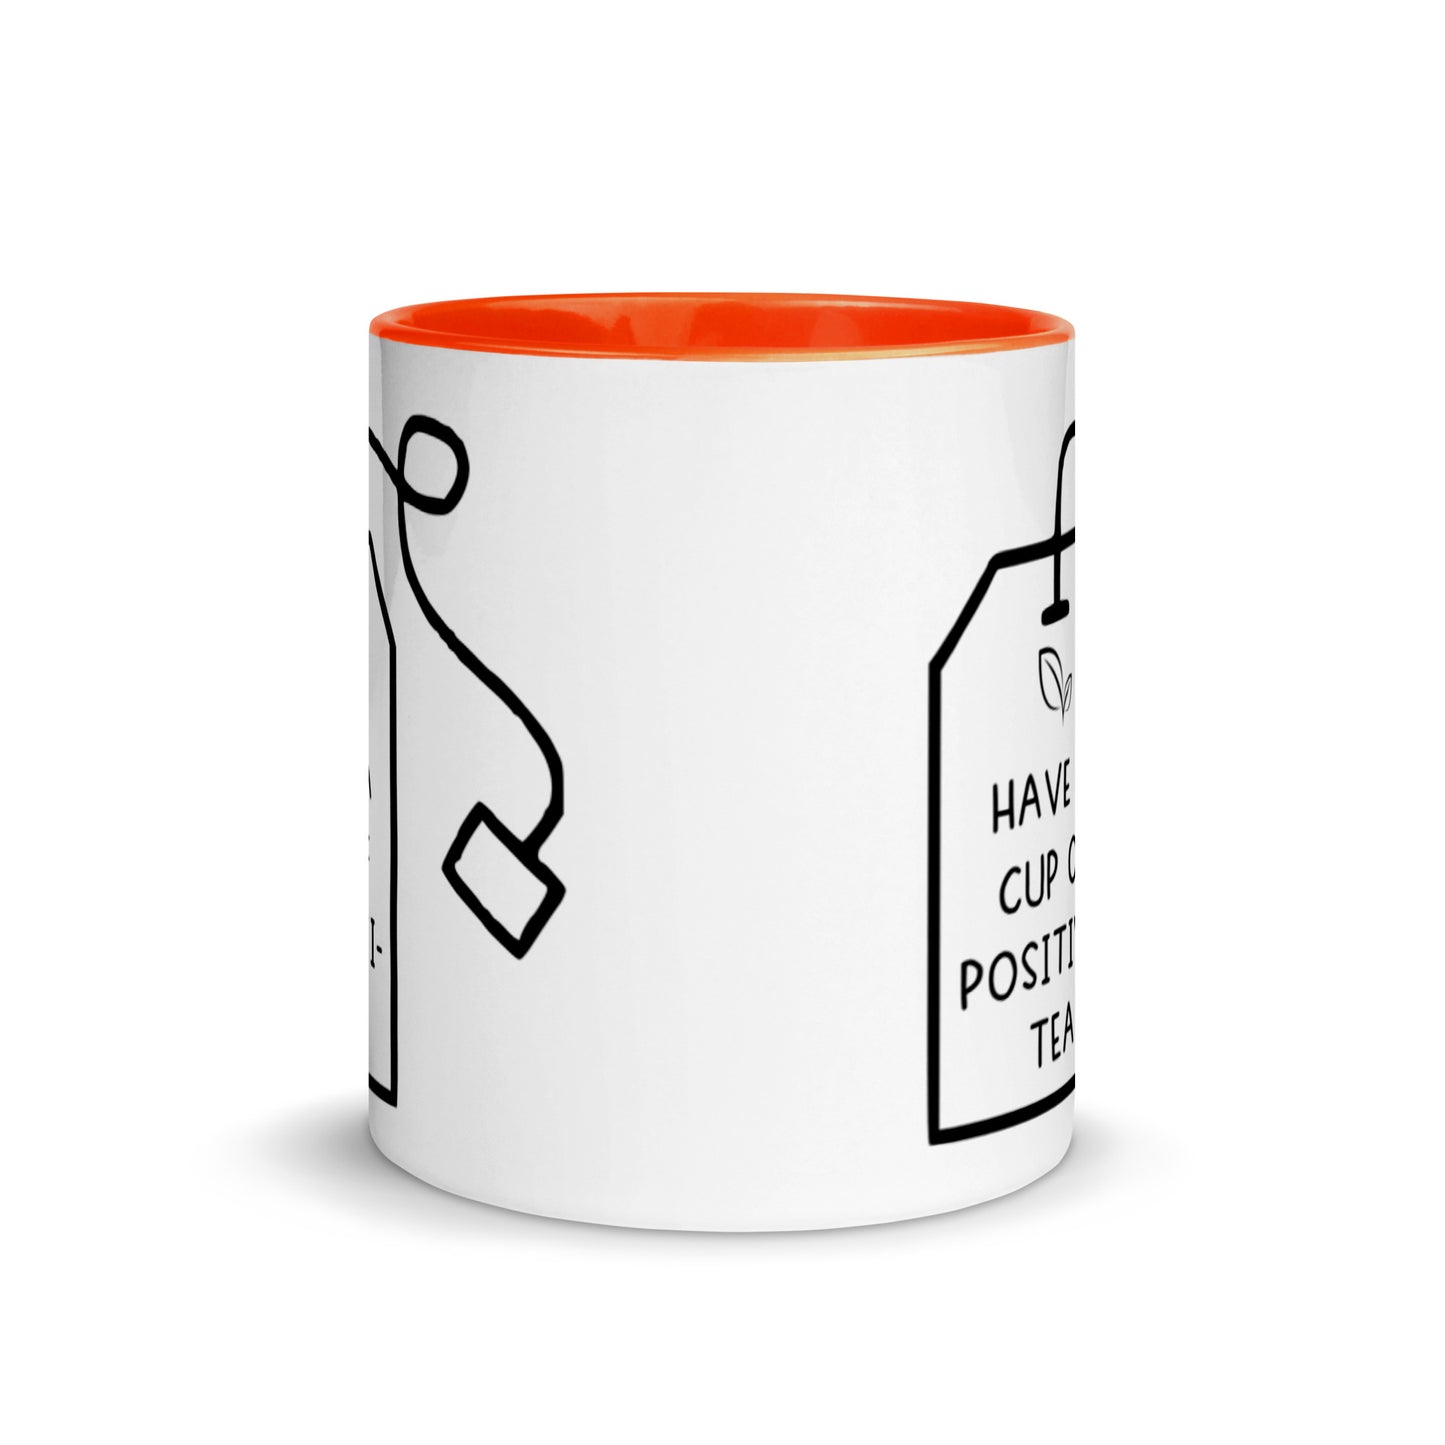 Have a Cup of Positivi-Tea Mug, orange interior and handle